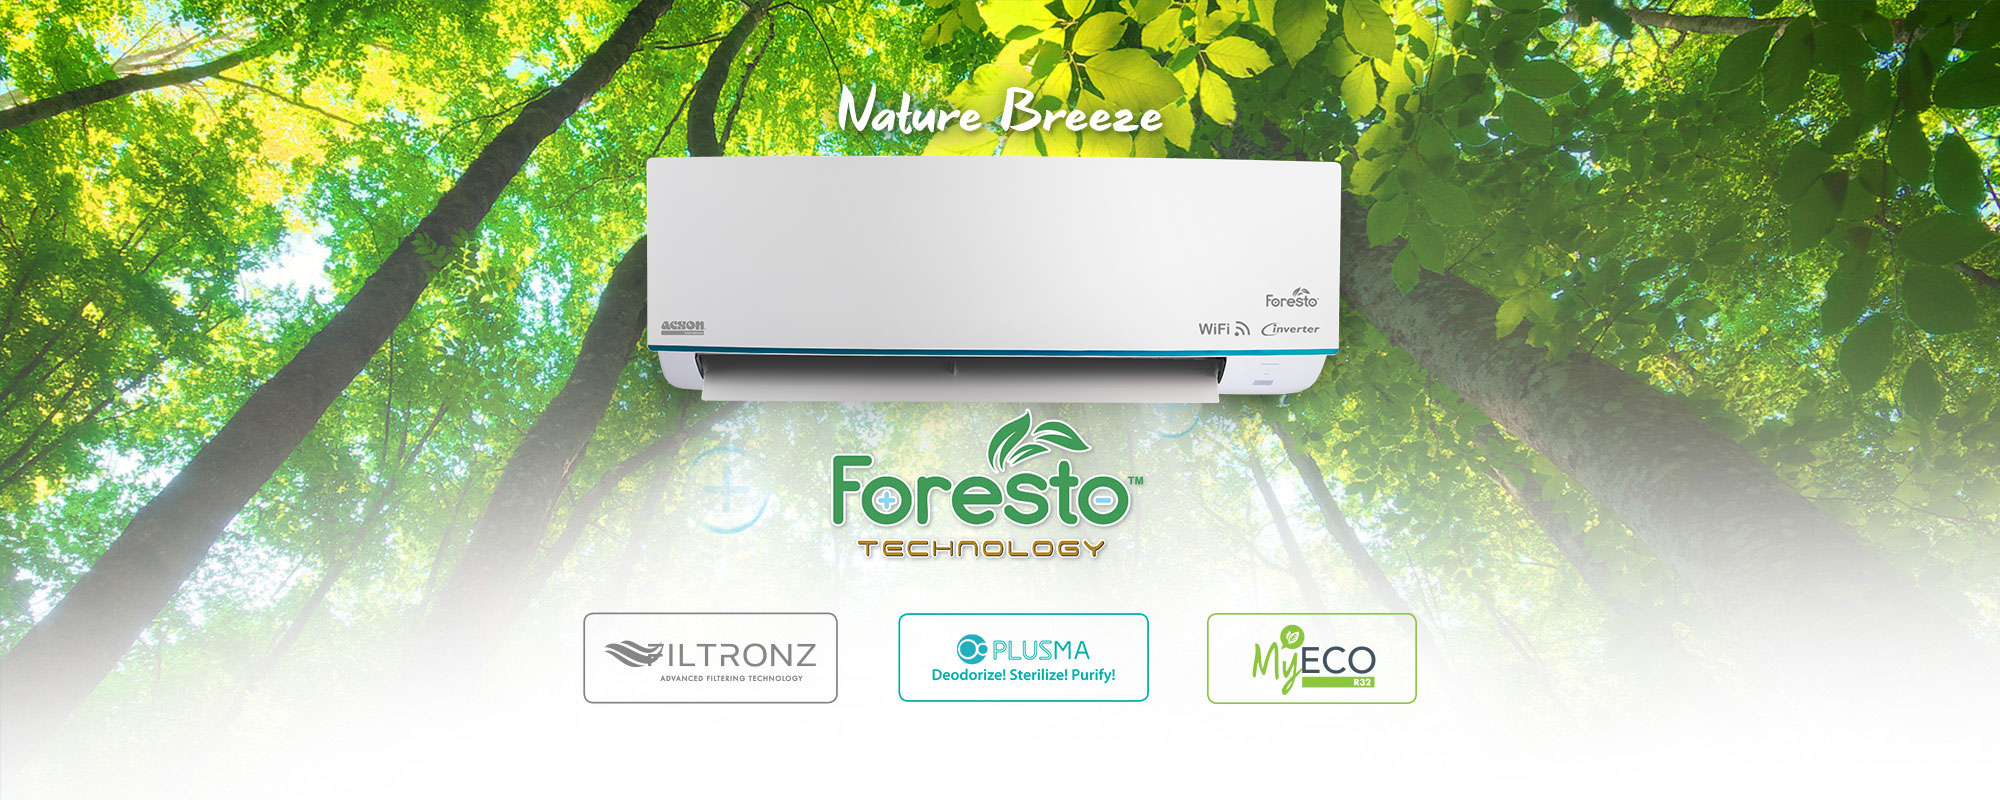 Foresto Technology